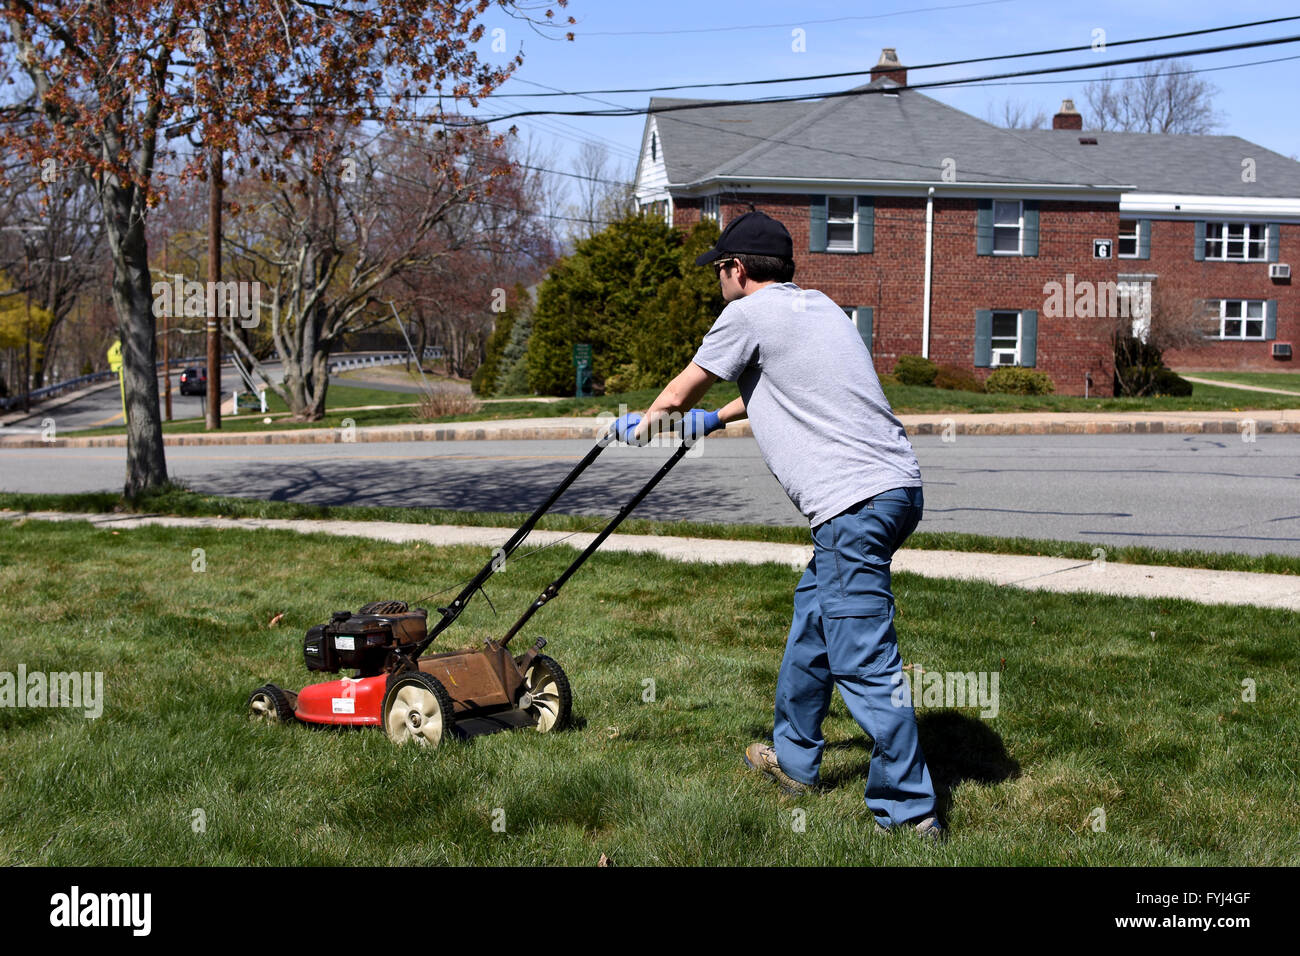 man mowing lawn grass Stock Photo